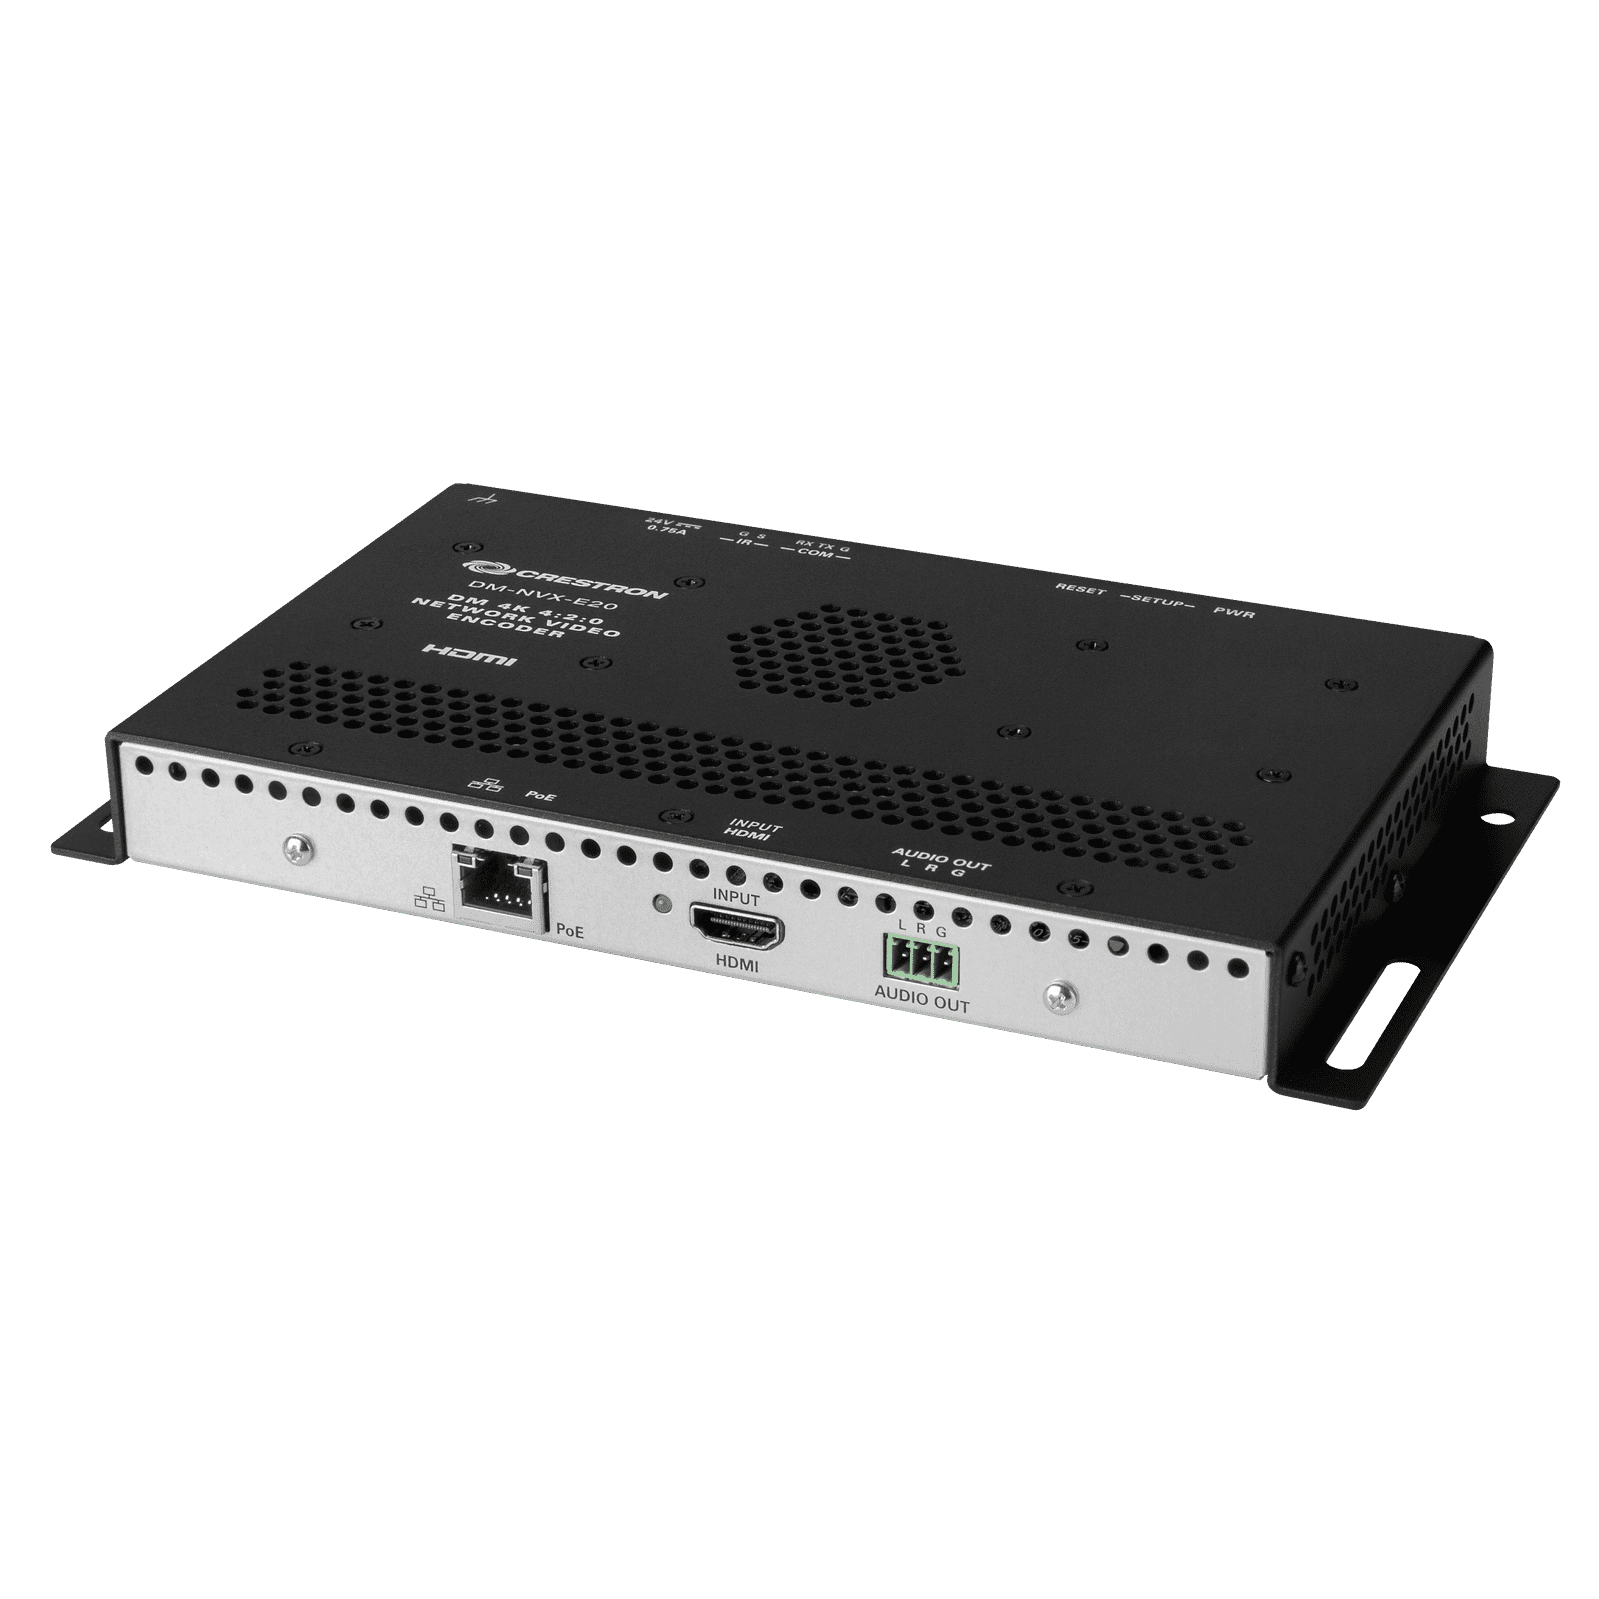 Get Crestron DM NVX® 4K60 4:2:0 Network AV Encoder from Malaysia Distributor - vnetwork